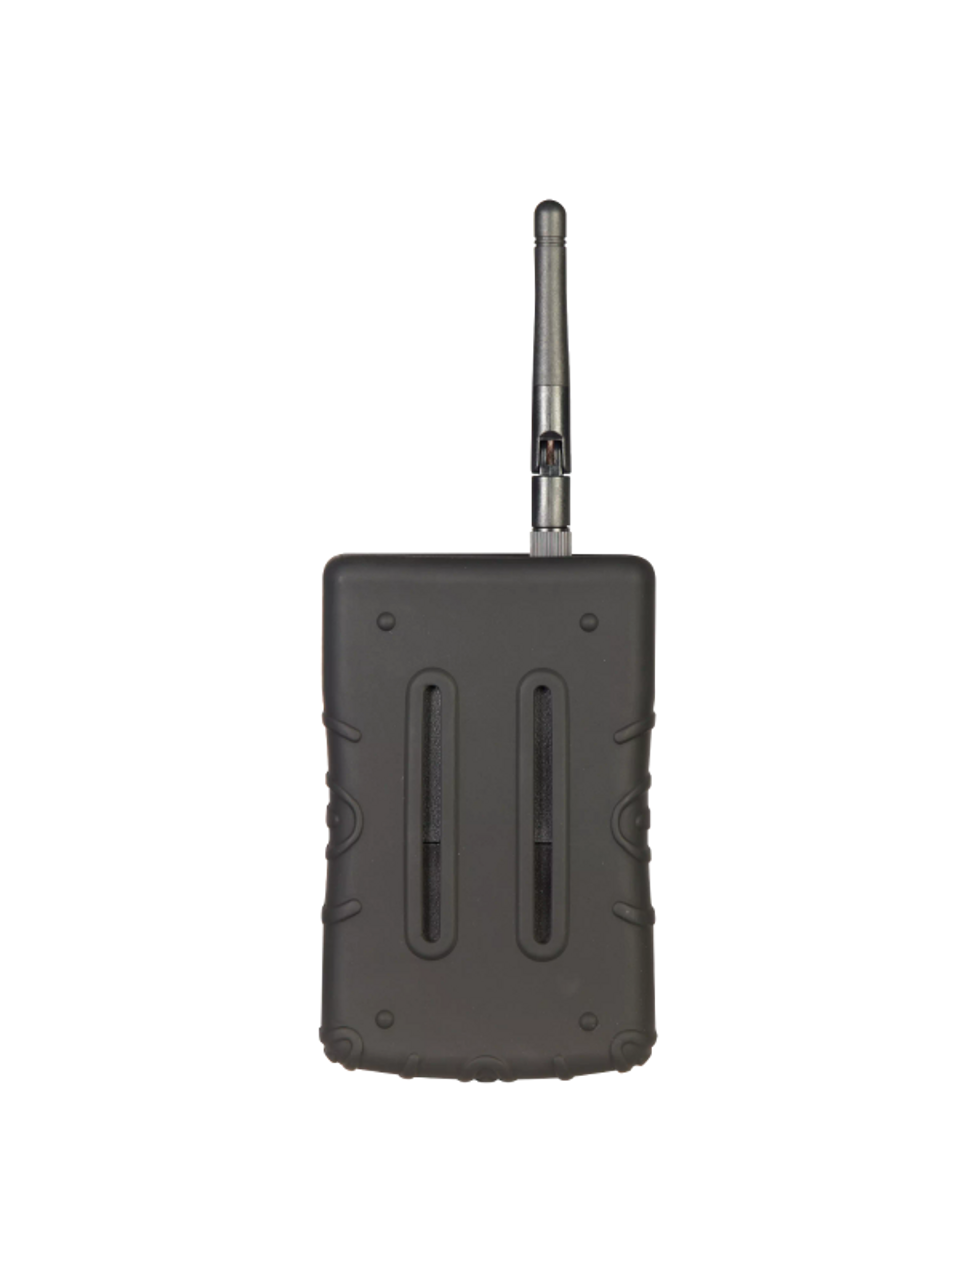 Q5X QG-H2 MicCommander Handheld Remote Control, for RCAS Transmitters (10-0149)